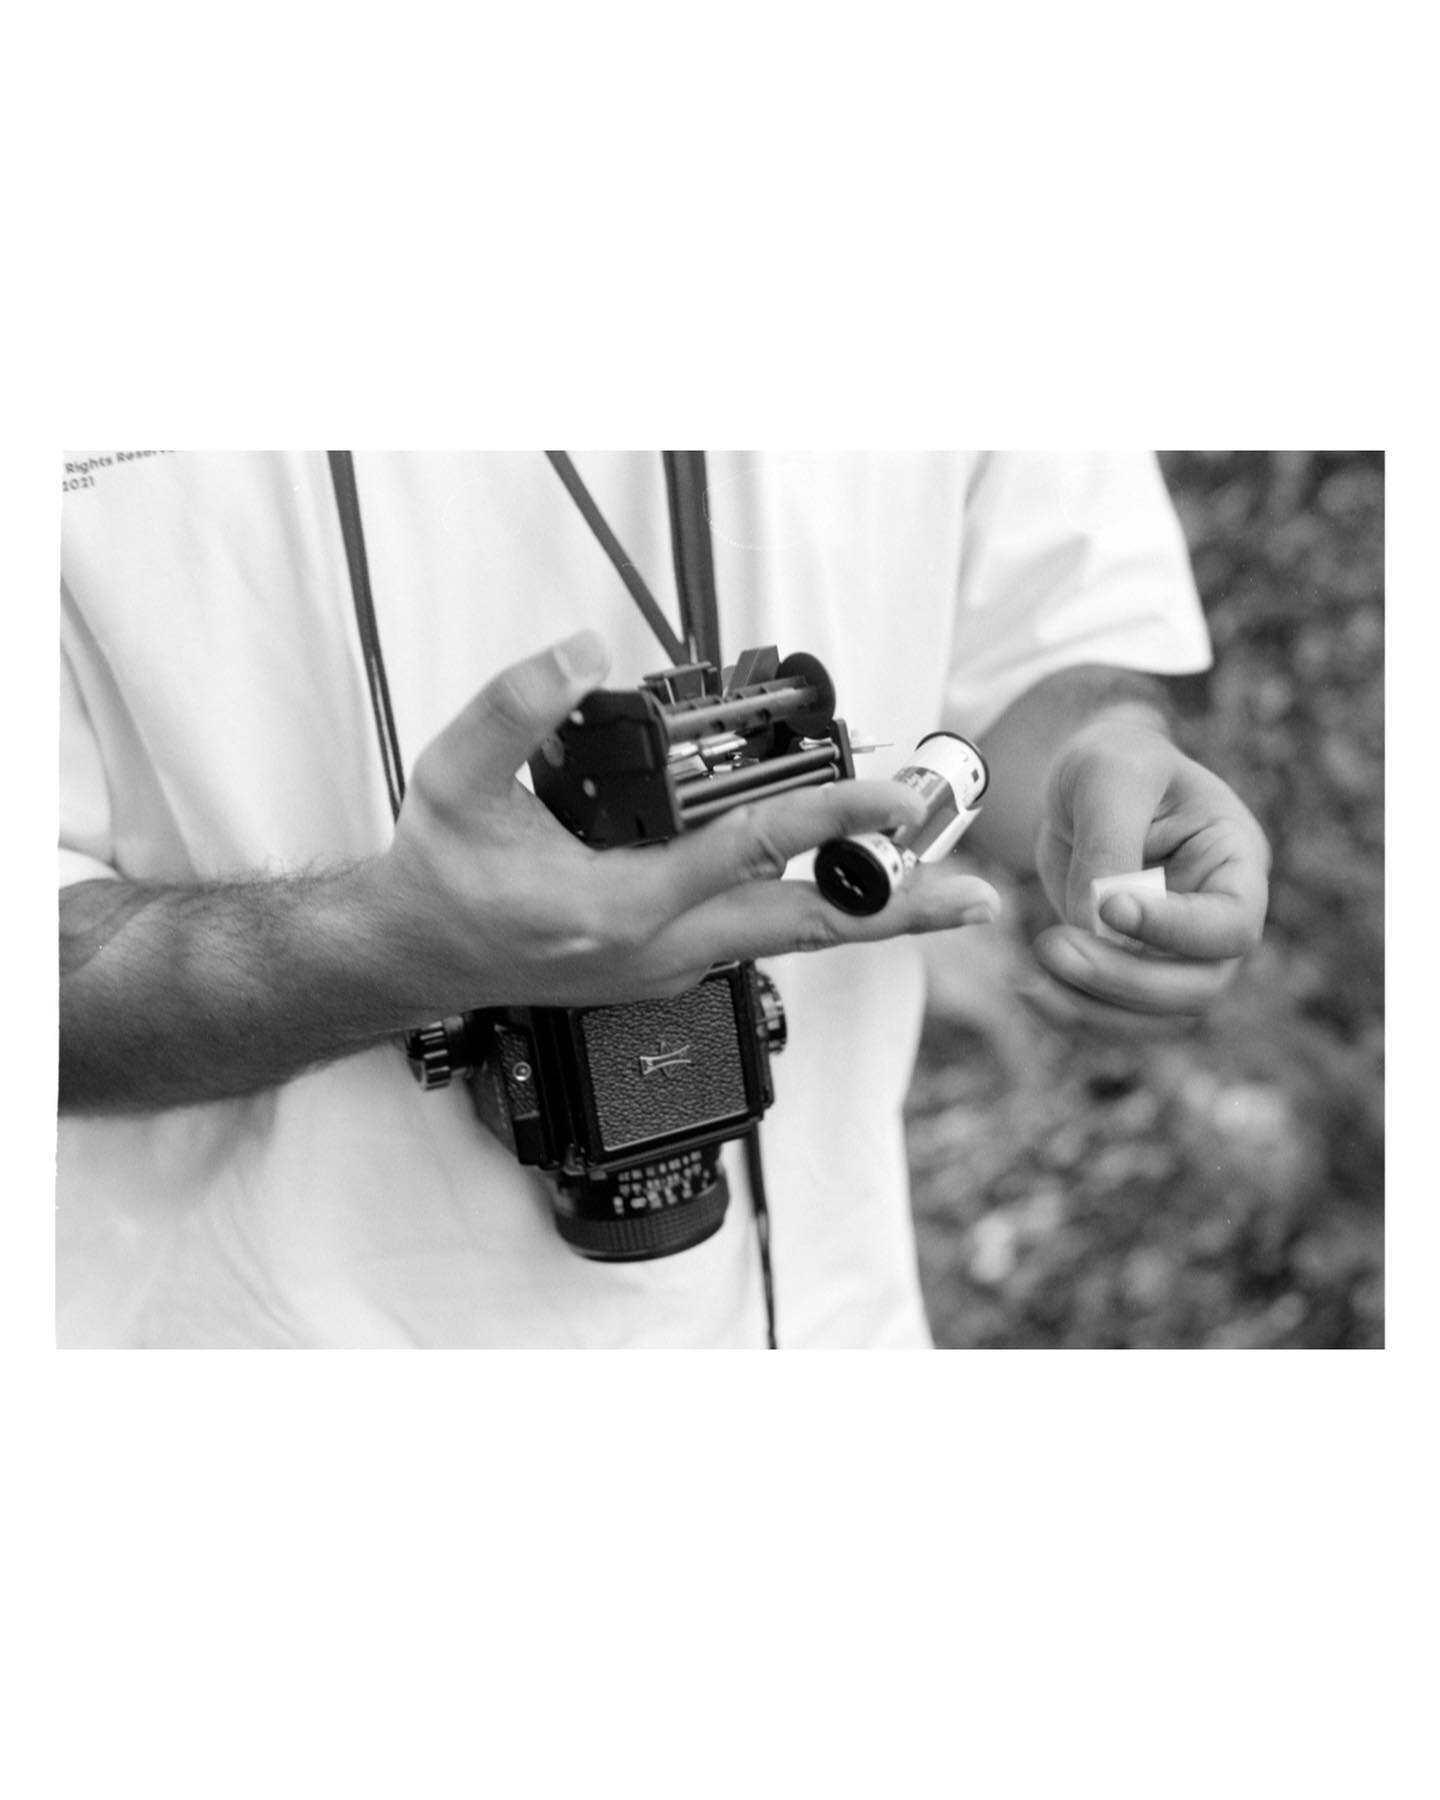 &bdquo;Du hast den Farbfilm vergessen&ldquo;
.
shot by @paulinanda 
📸 Nikon FE2
🎞 Ilford Delta 100
.
.
.
#filmphotography #filmcamera #photography #analogphotography #analog #nikonfe2 #mamiya645 #ilforddelta100 #35mm #35mmfilmphotography #analoguep